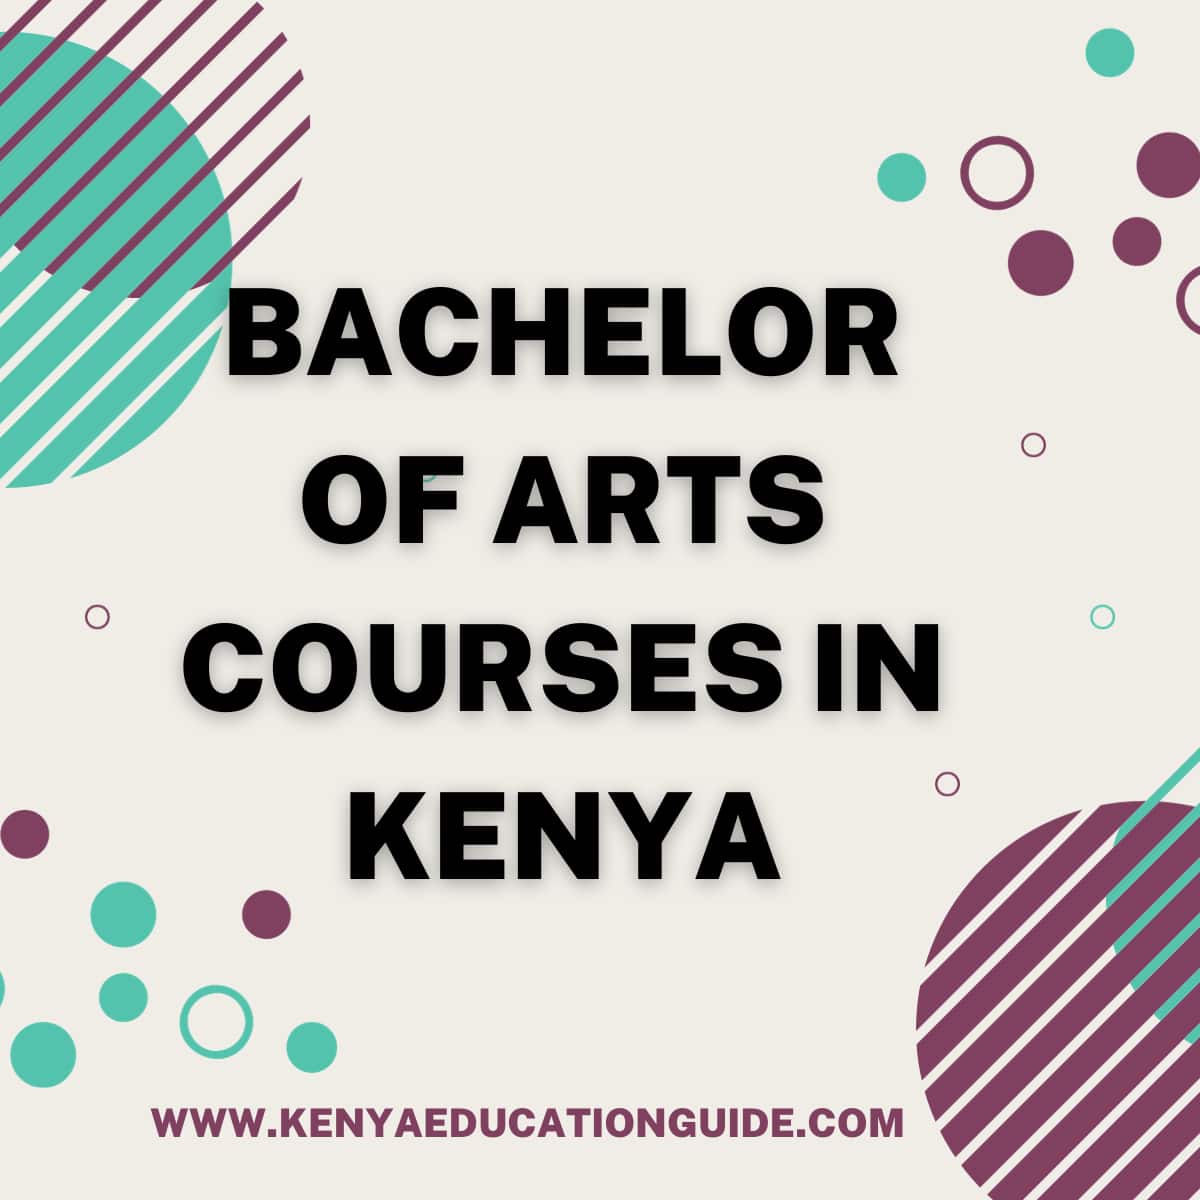 Bachelor of Arts Courses in Kenya